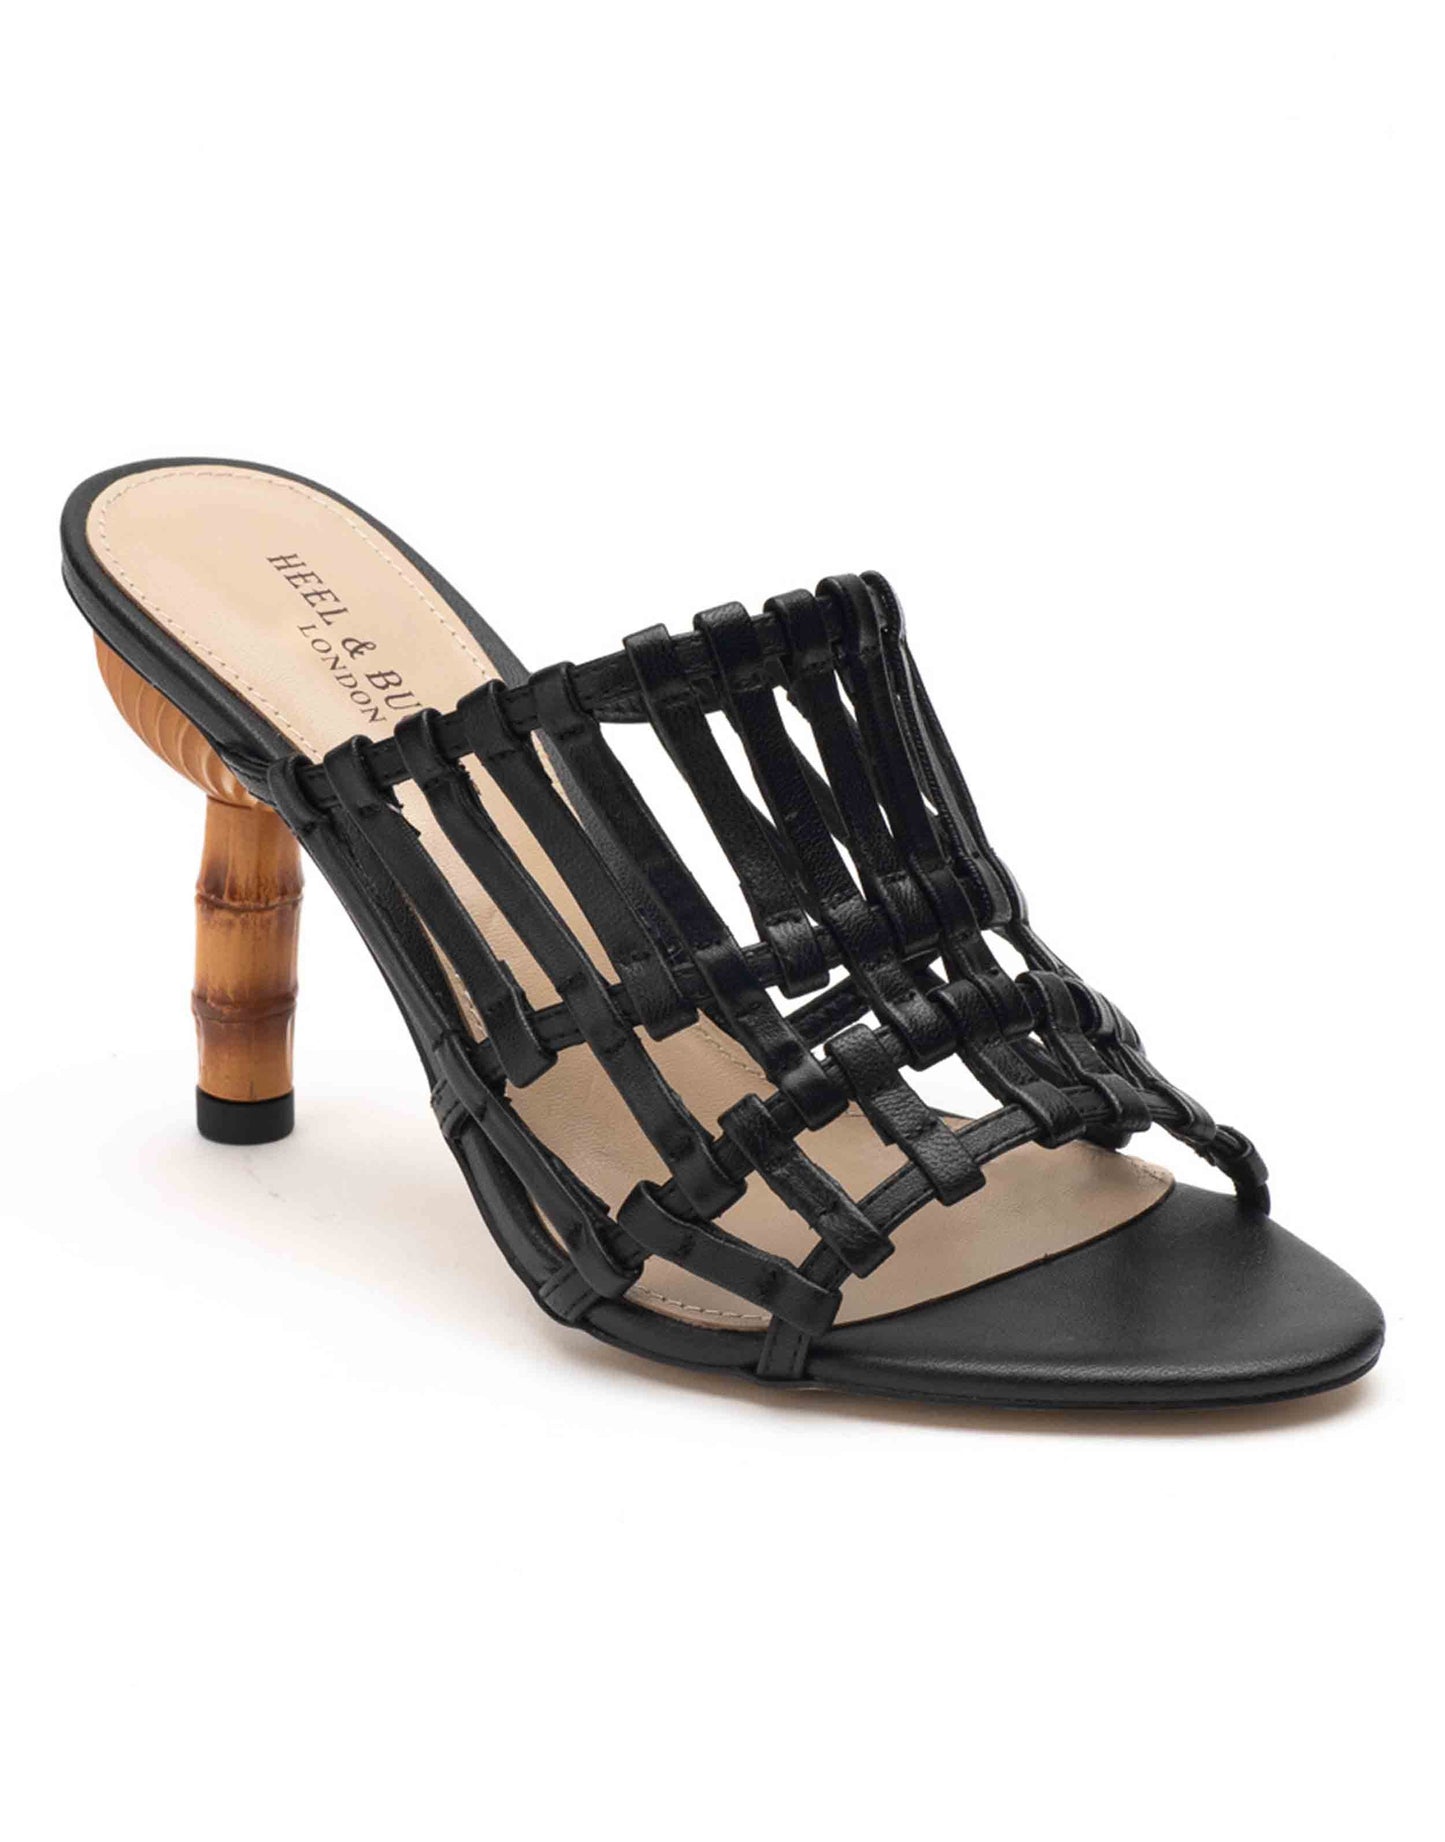 Black Strappy Heel Sandals